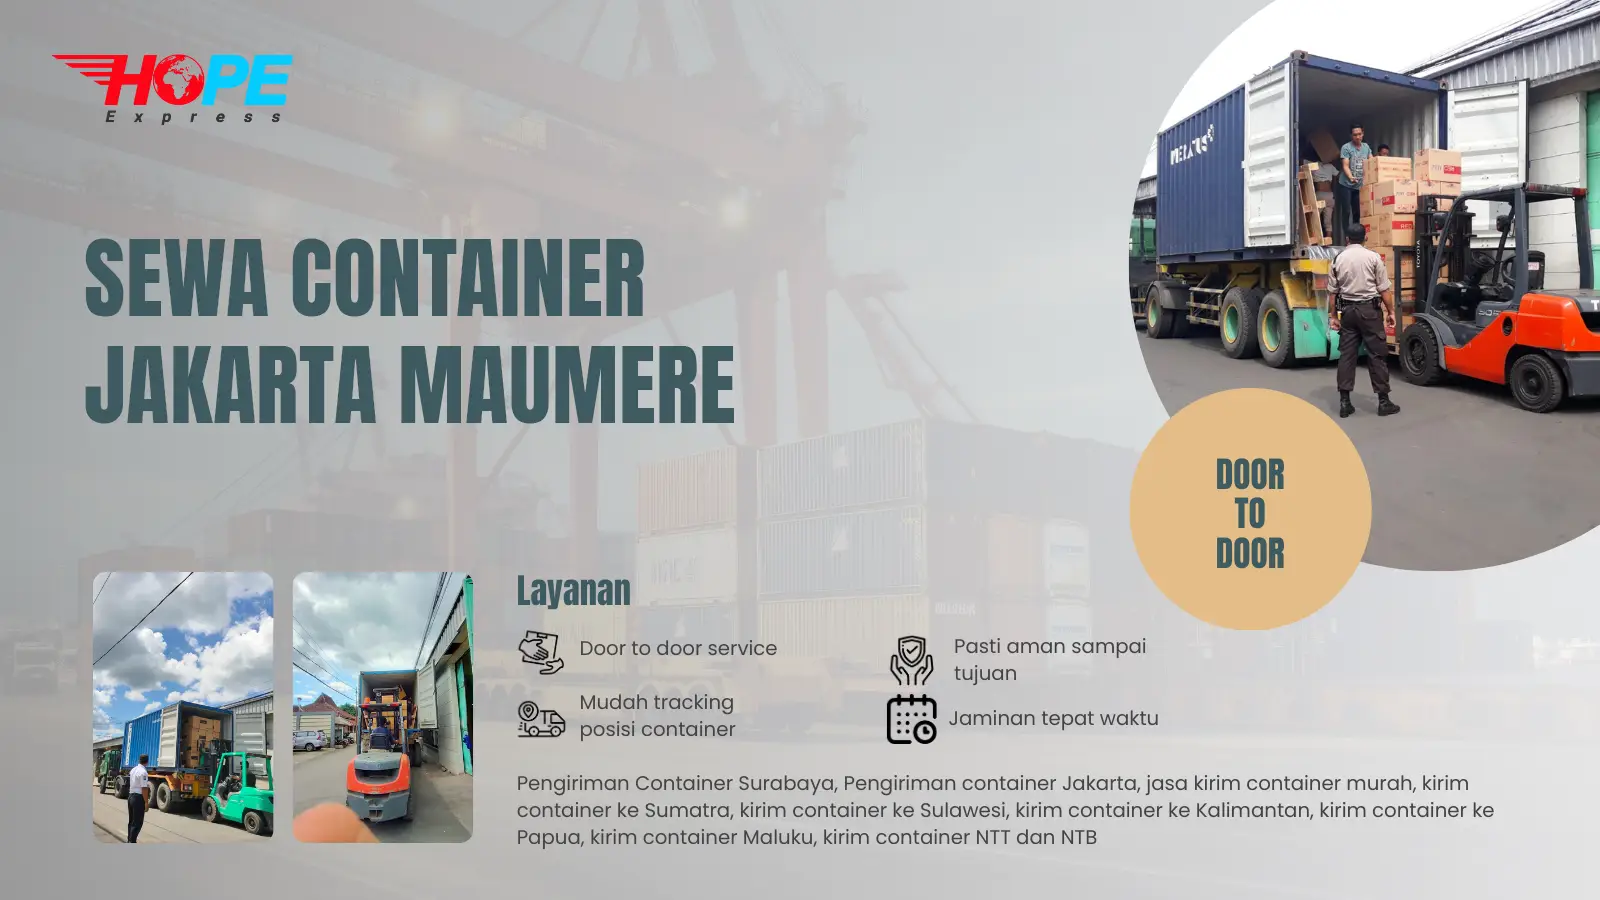 Sewa Container Jakarta Maumere